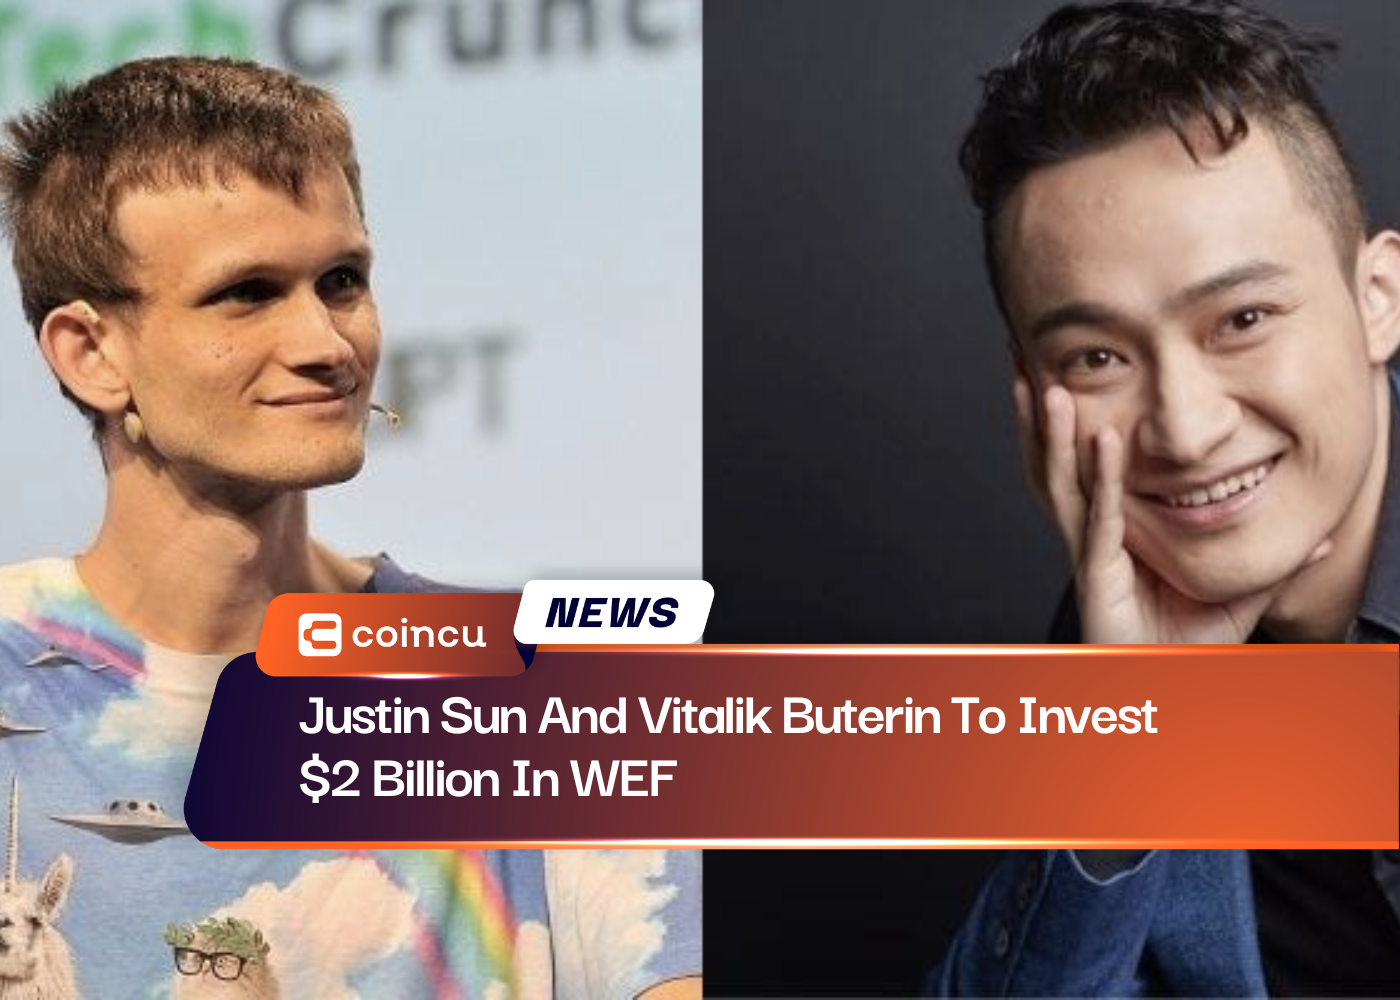 Justin Sun And Vitalik Buterin To Invest $2 Billion In WEF